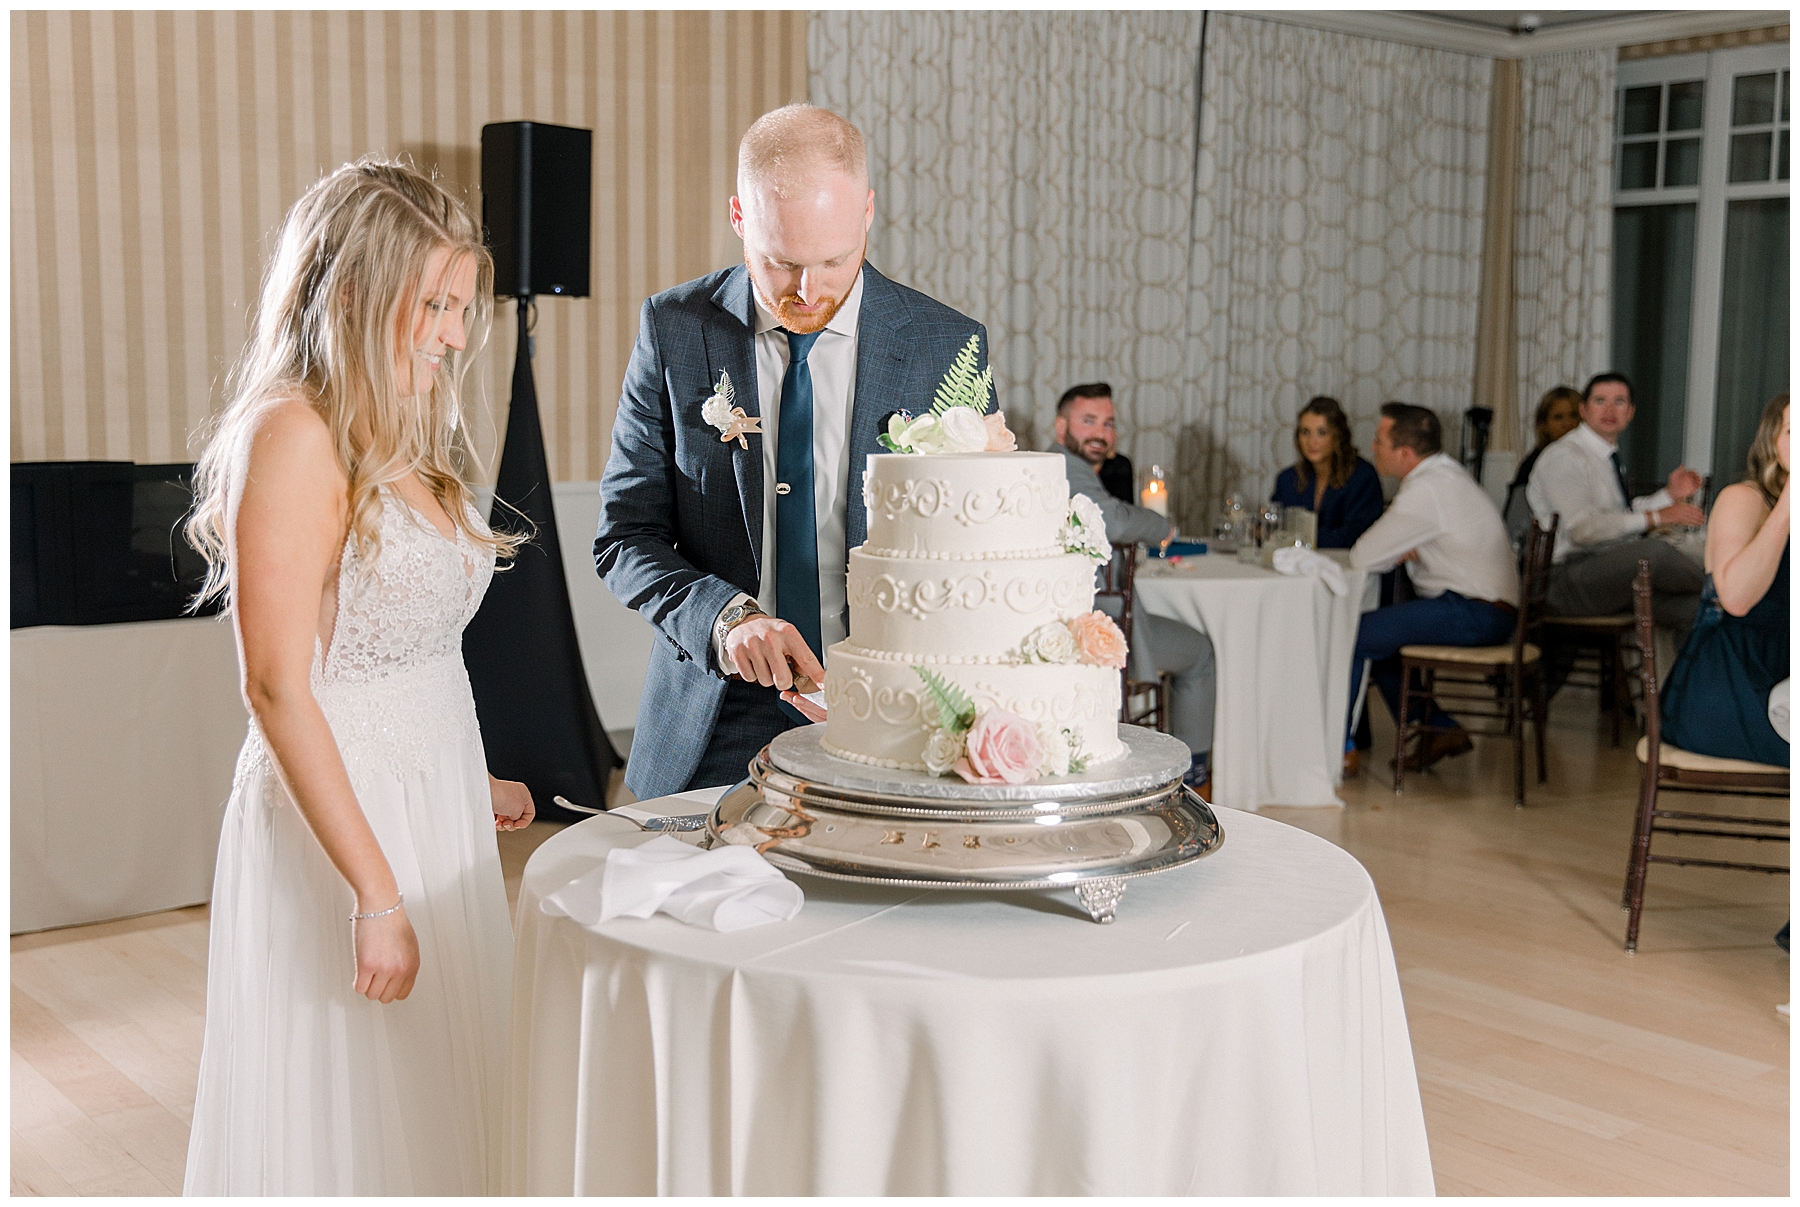 Bride + groom cut wedding cake at reception in Gloucester MA